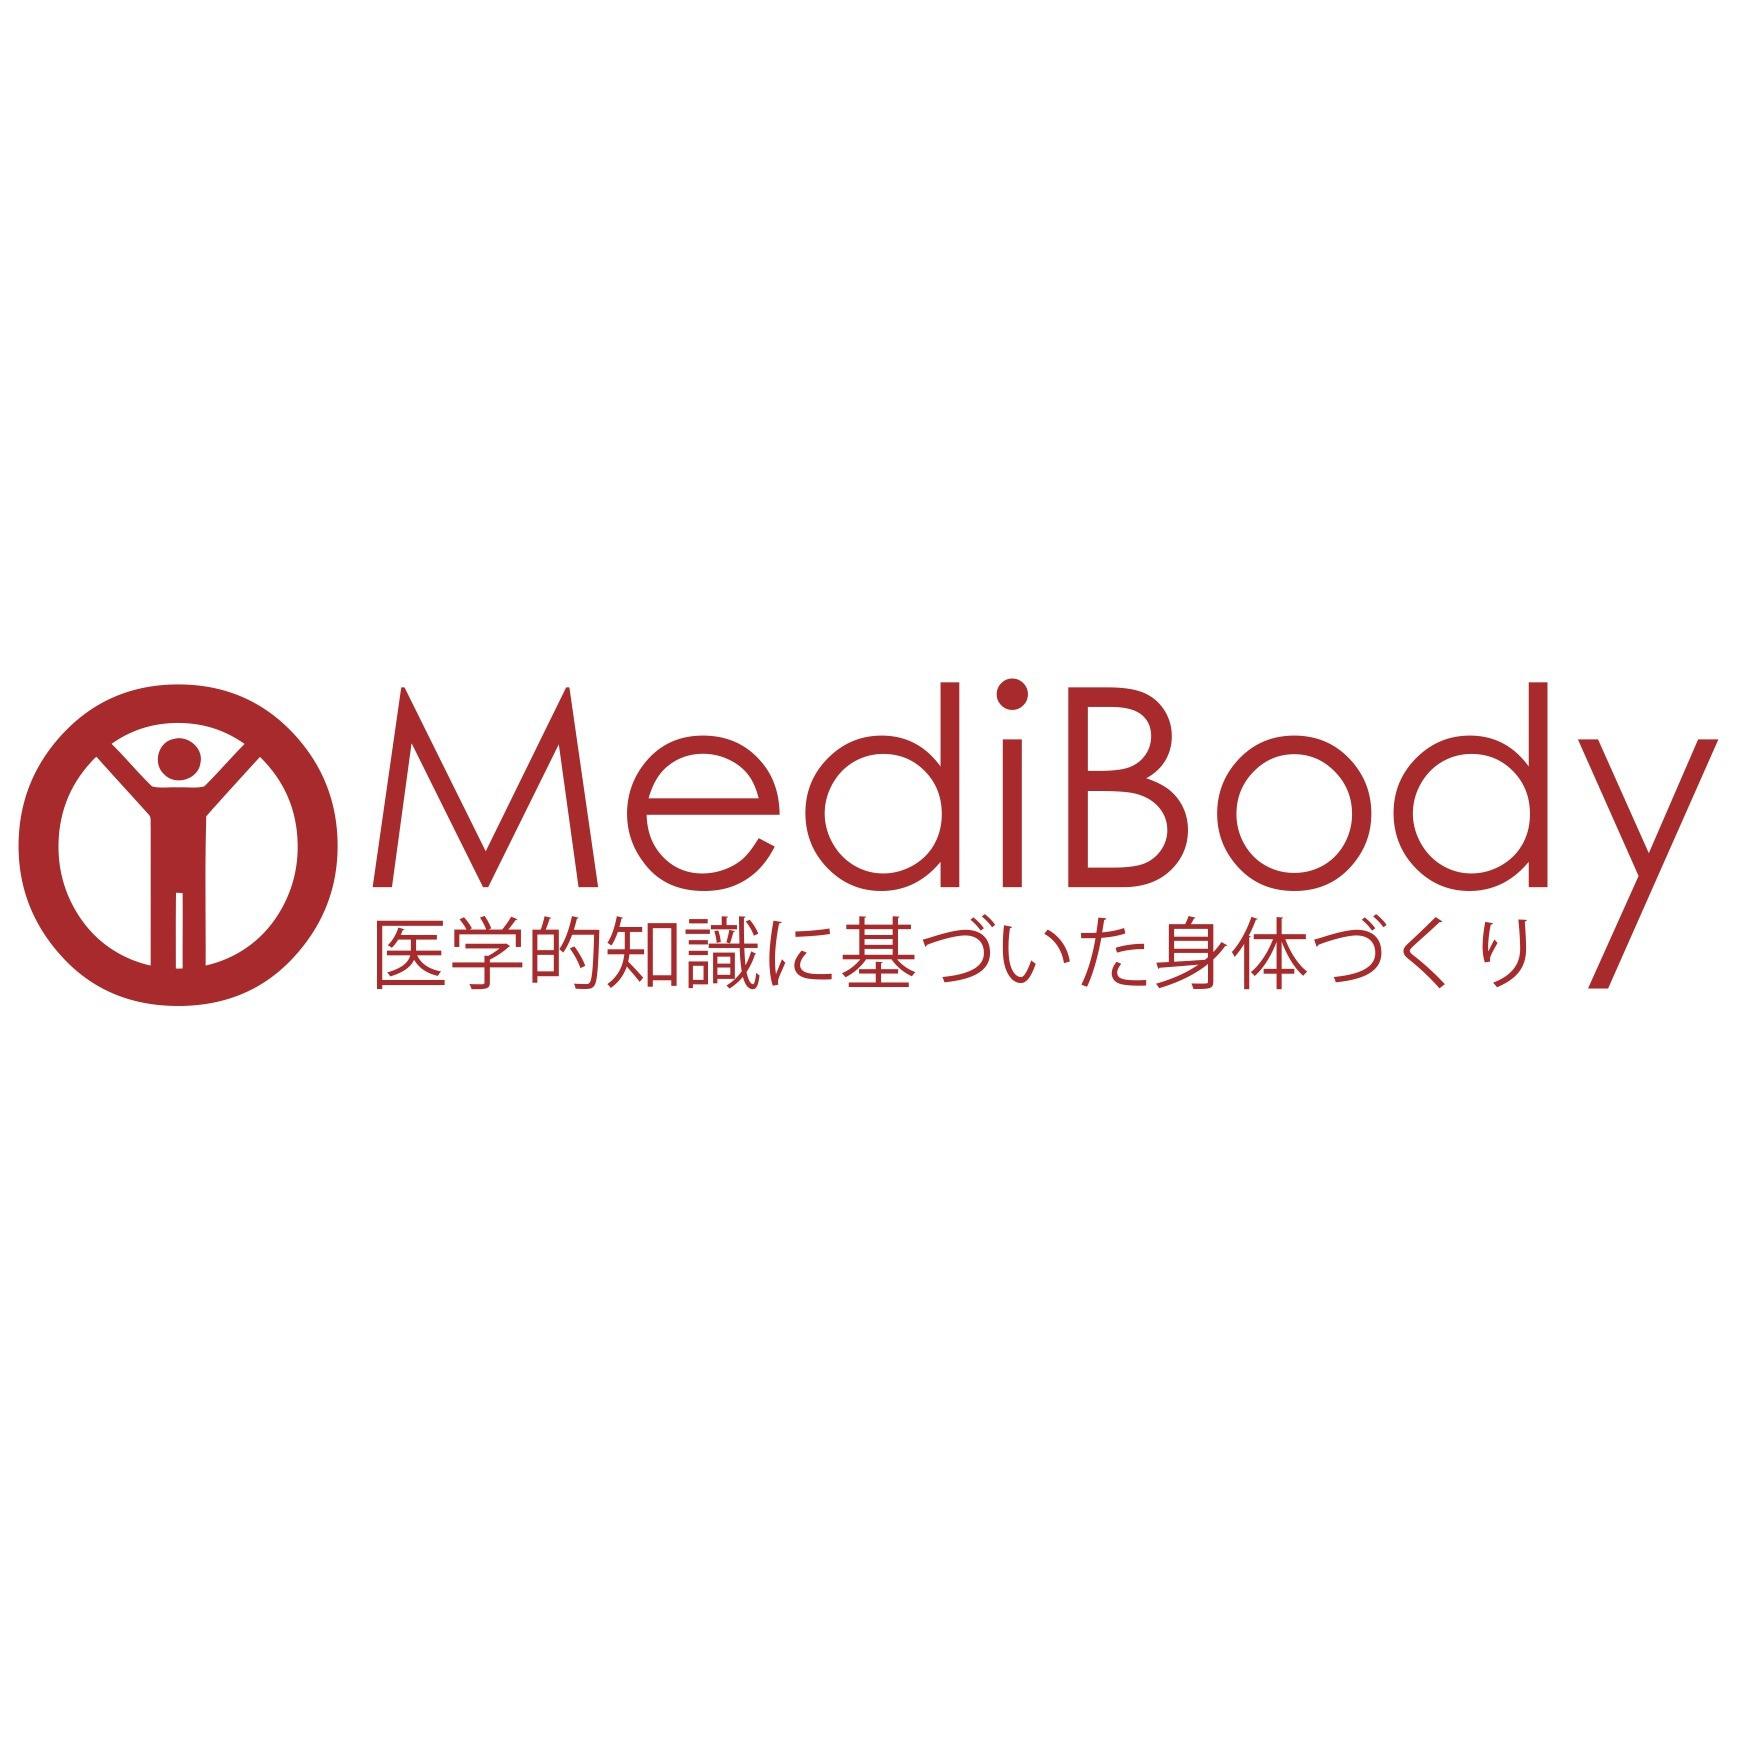 Medibody(メディボディ) Logo